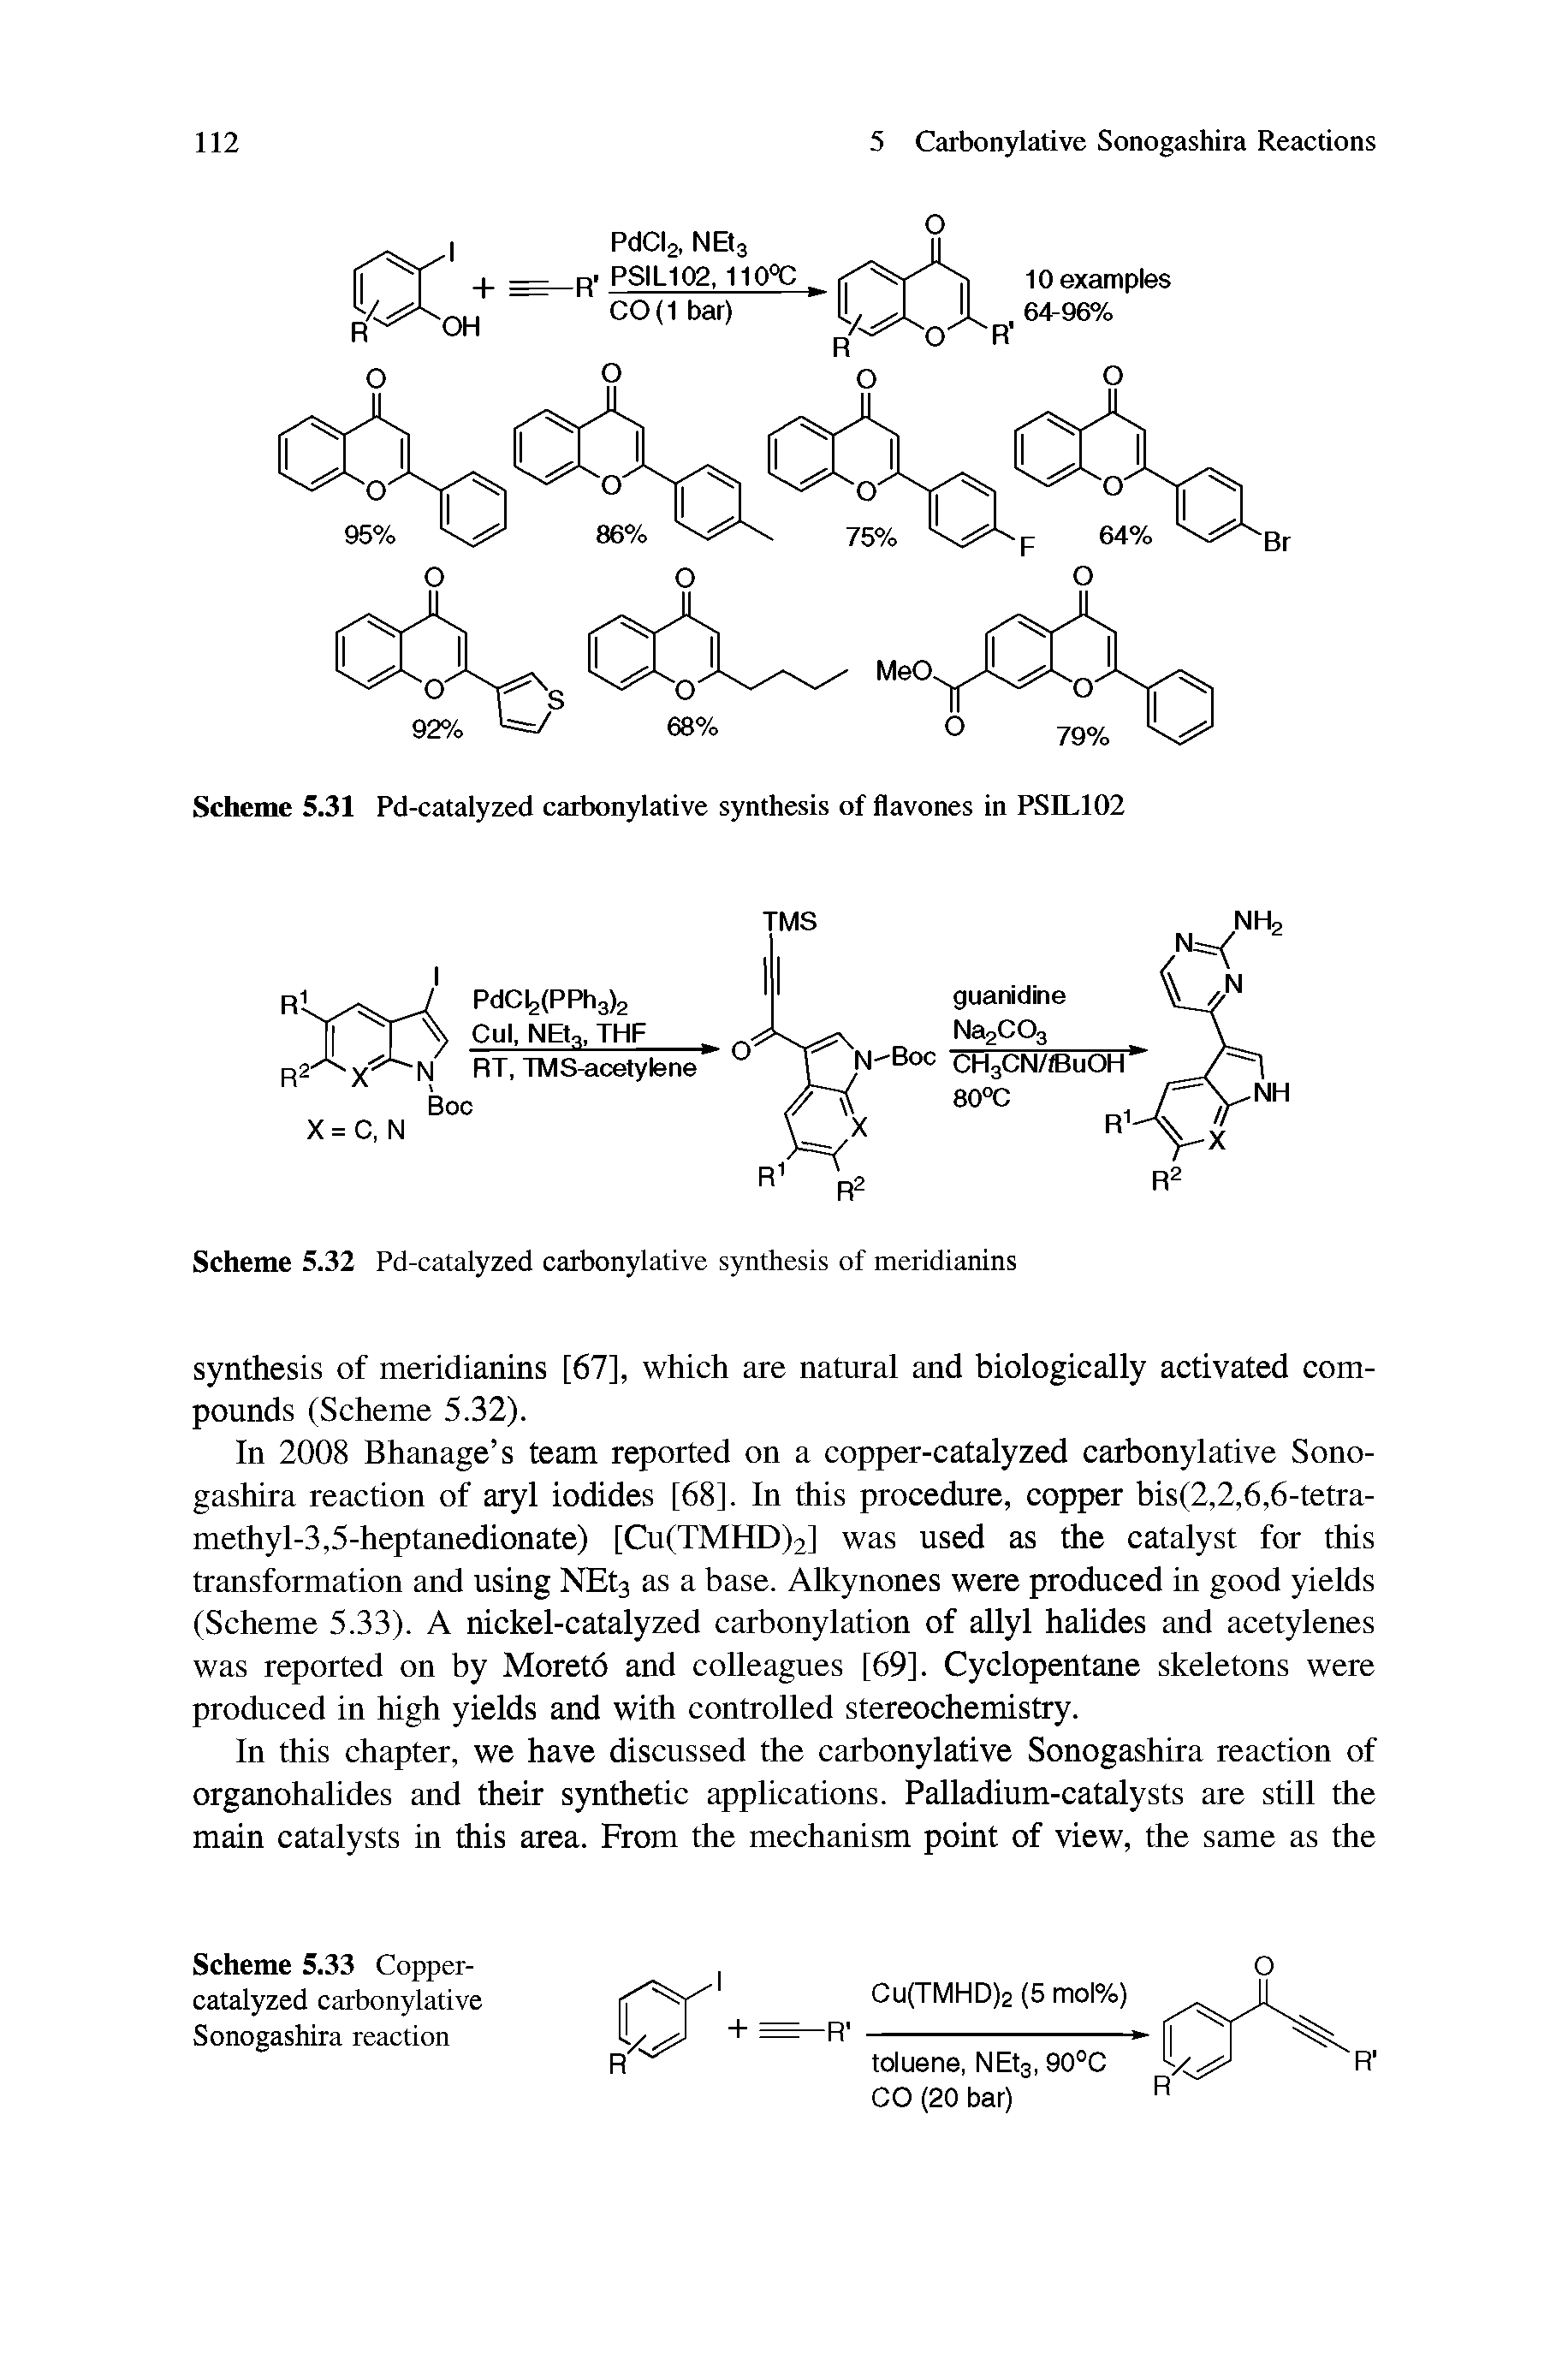 Scheme 5.33 Copper-catalyzed carbonylative Sonogashira reaction...